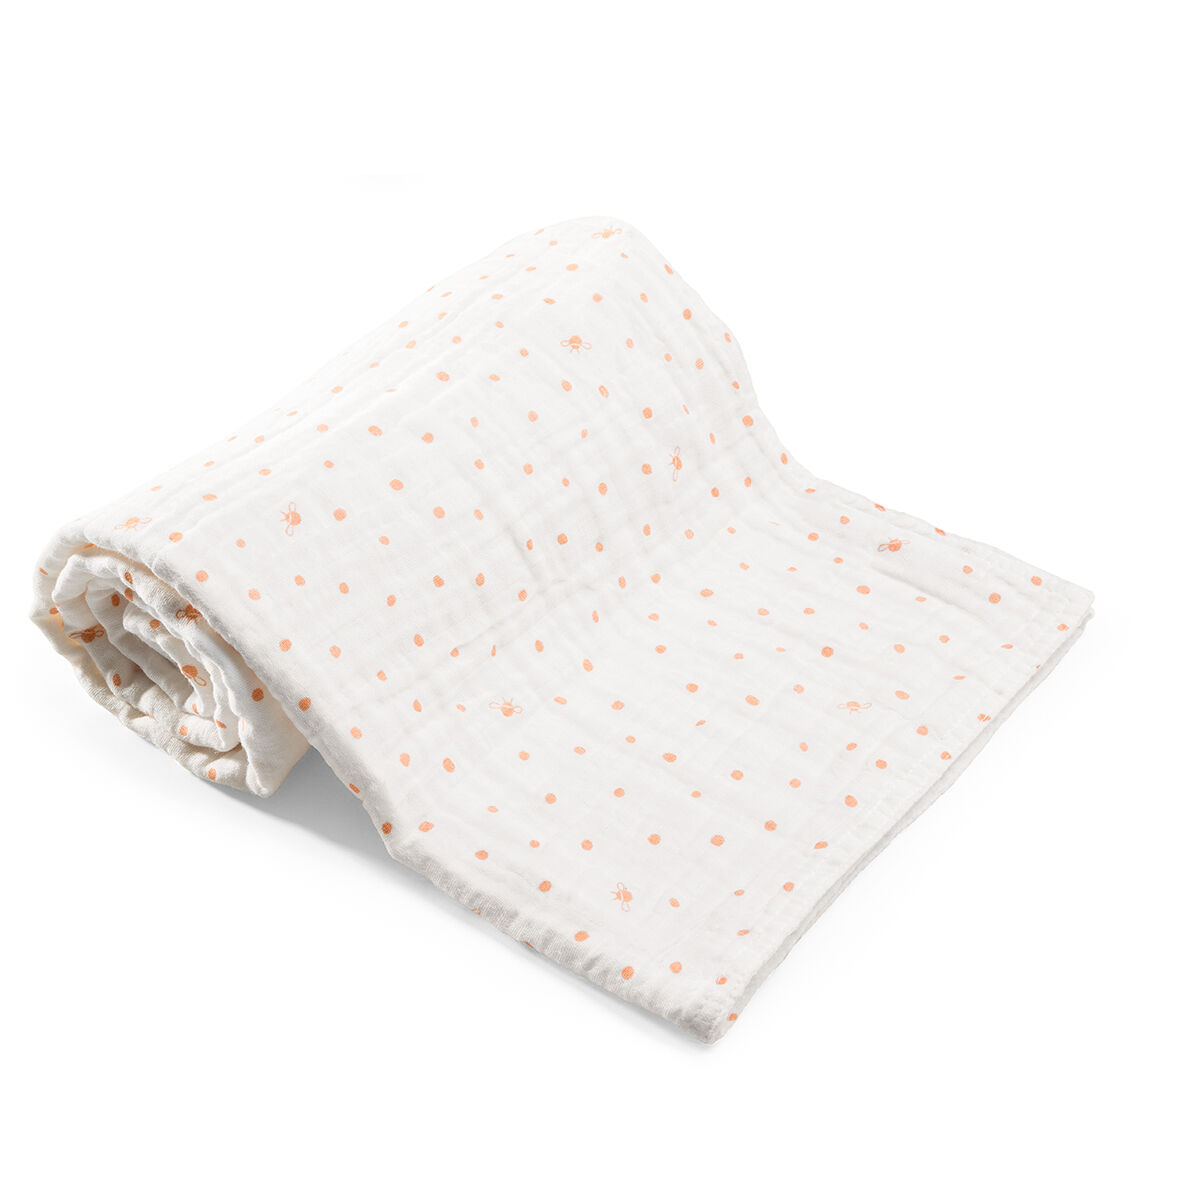 Blanket, Muslin Cotton, Coral Bee